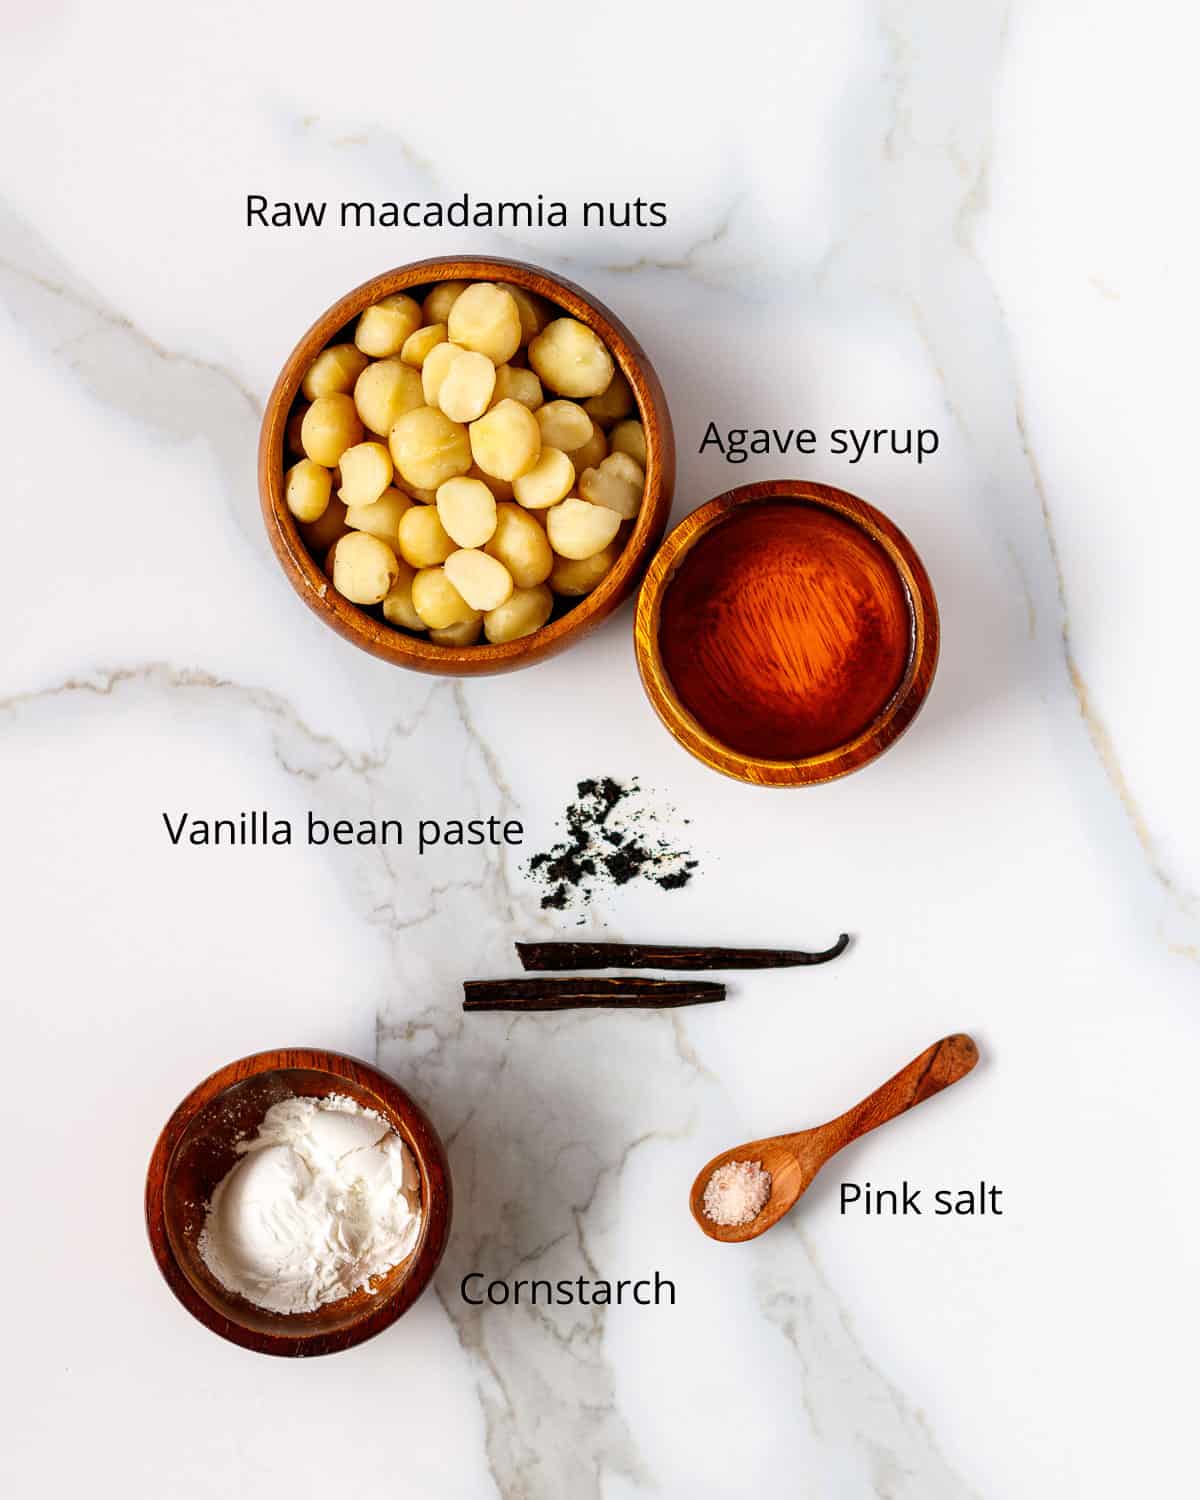 Macadamia nuts, agave, vanilla bea, cornstarch and pink salt.